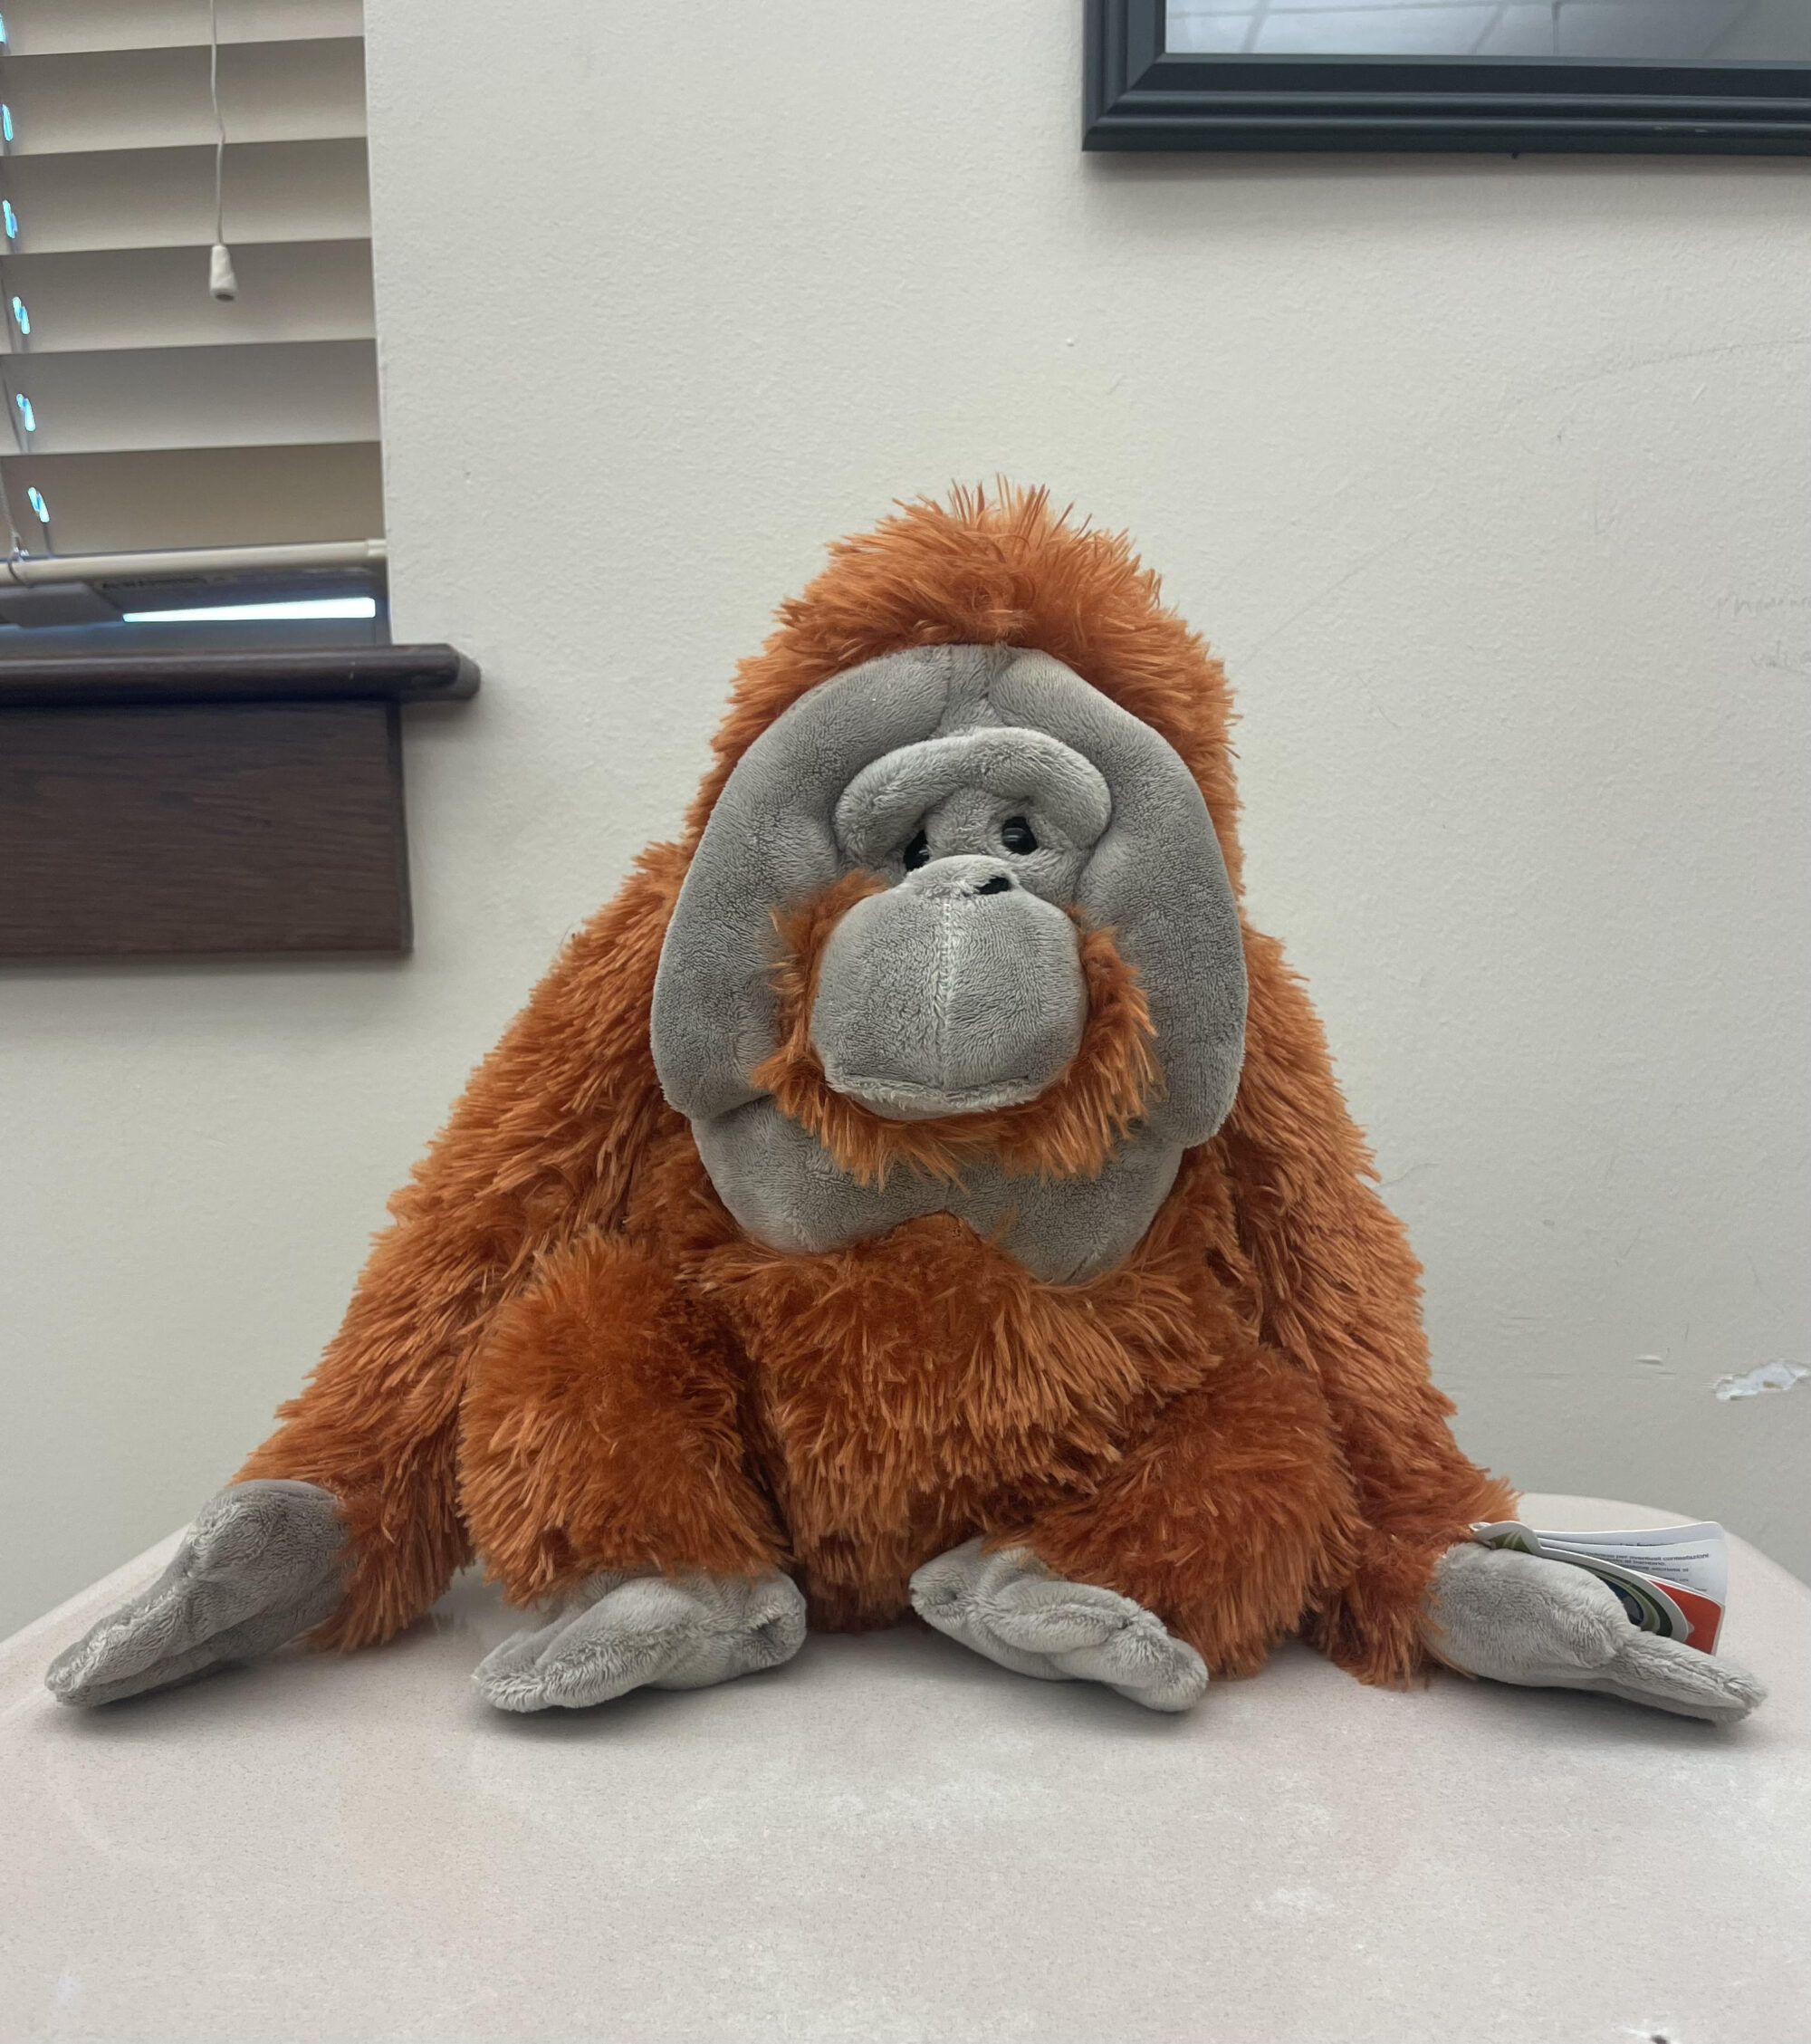 Photo of a stuffed orangutan.